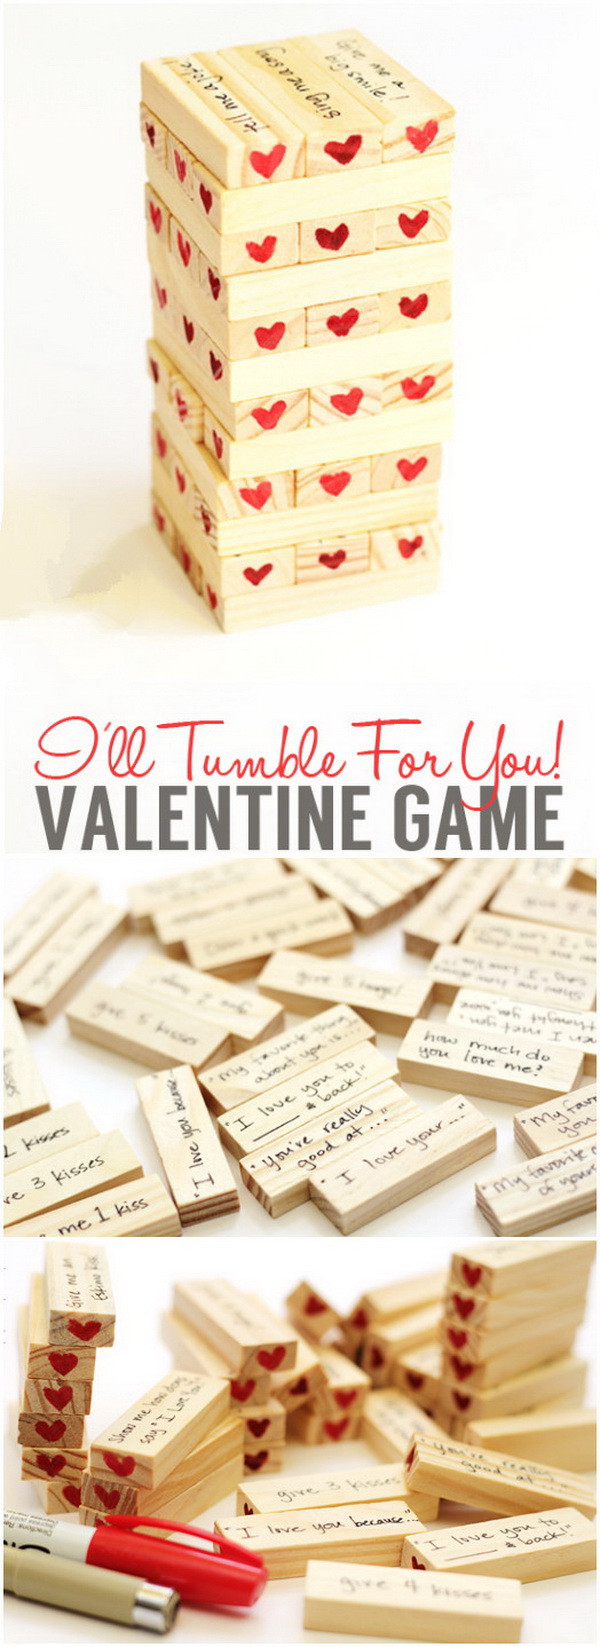 Valentines Gift Ideas For Boyfriends
 Easy DIY Valentine s Day Gifts for Boyfriend Listing More